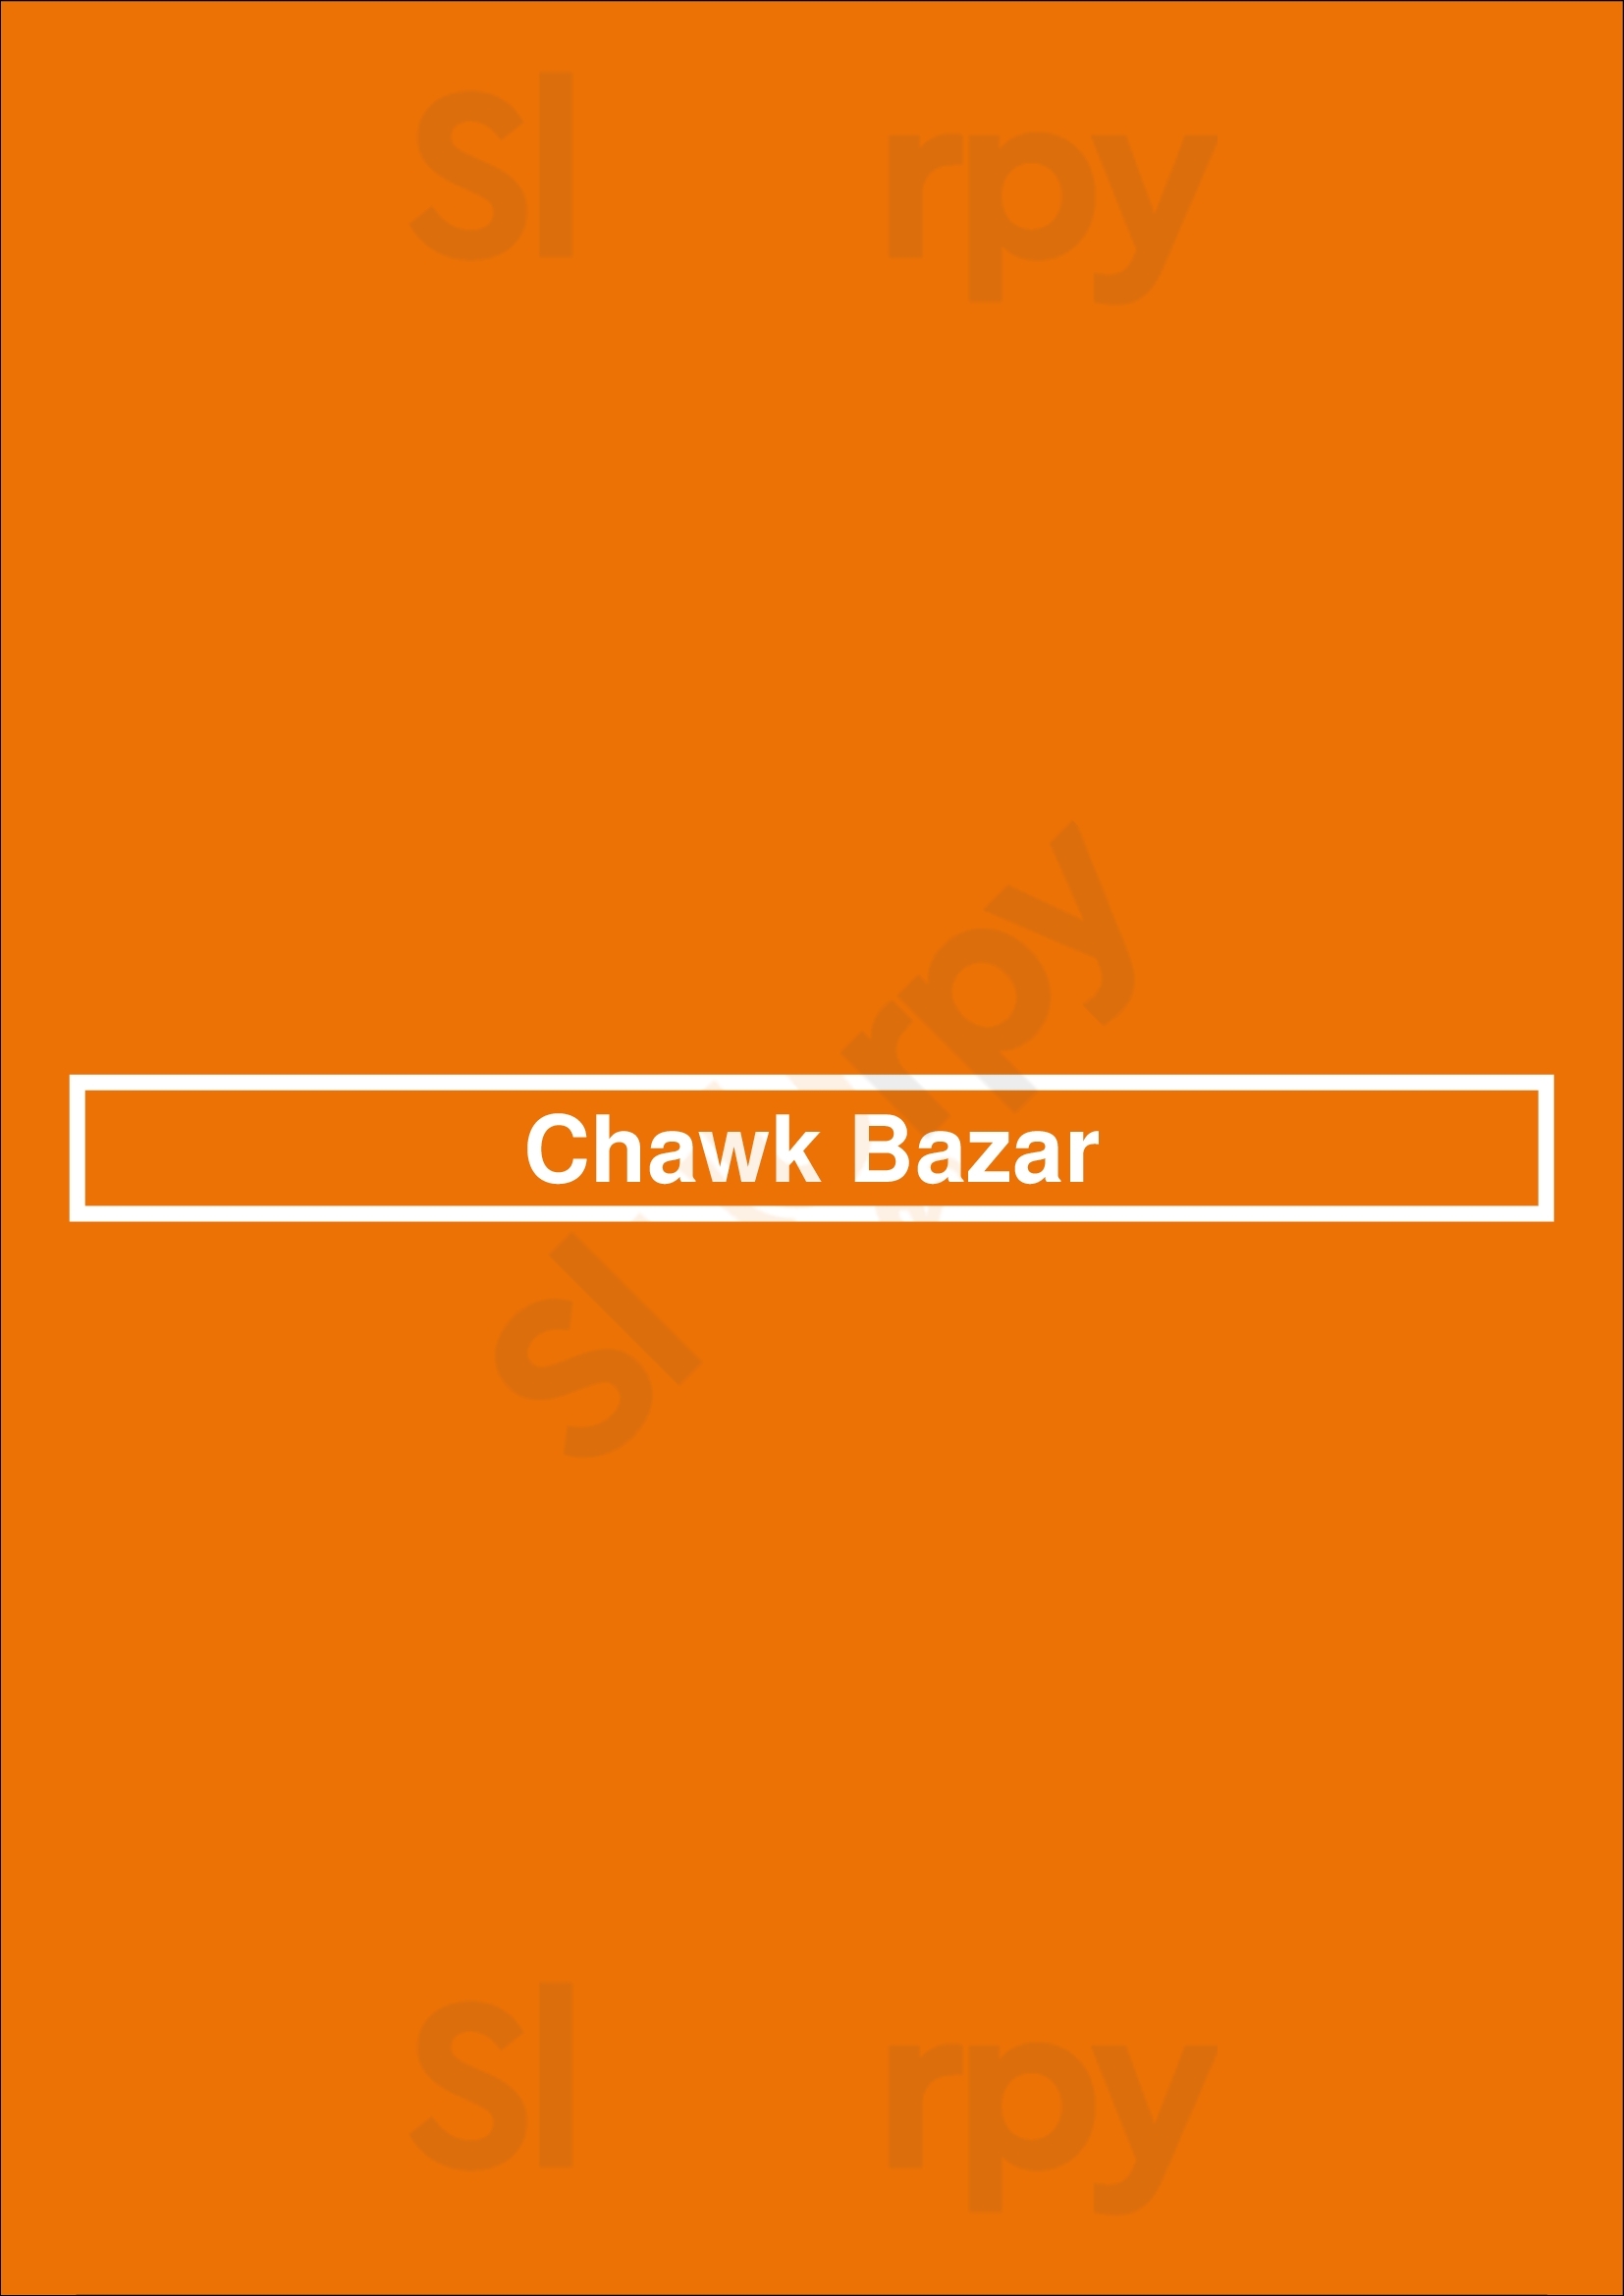 Chawk Bazar Toronto Menu - 1